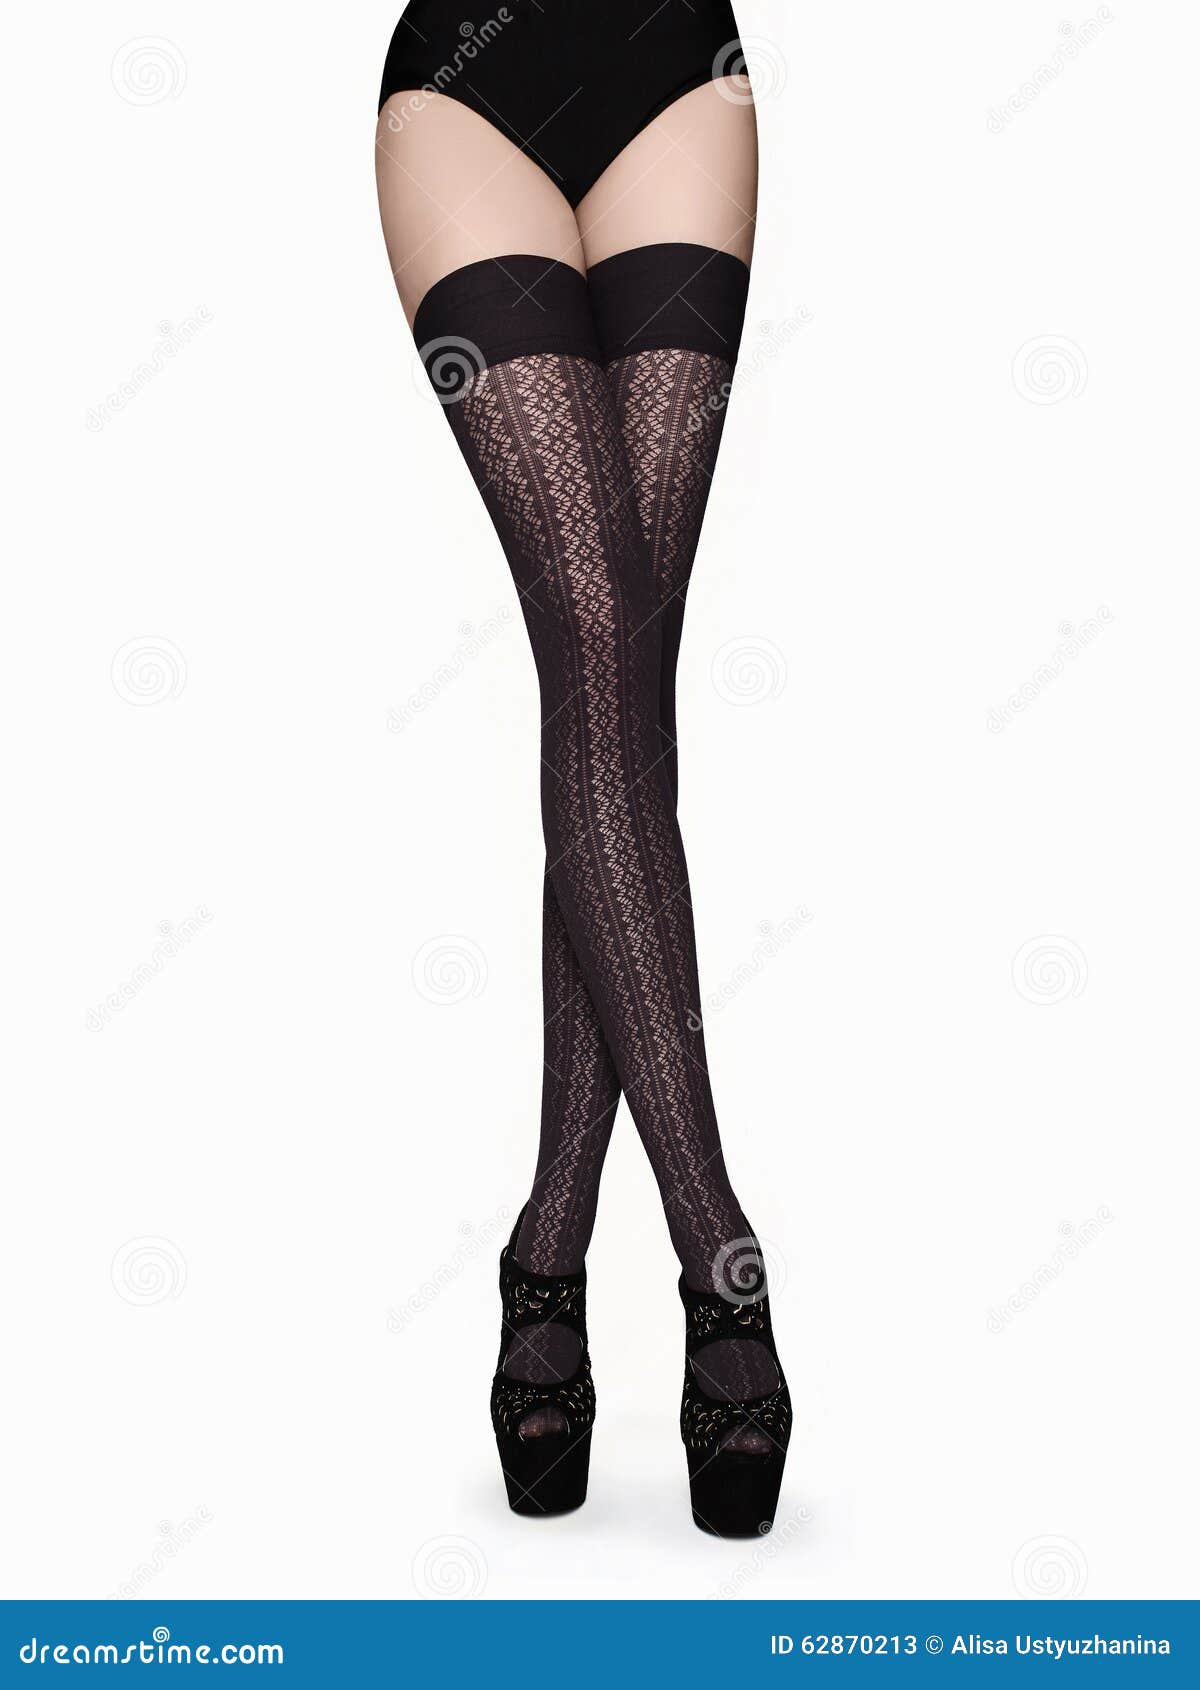 Beautiful Legs in Stockings Stock Image - Image of fashion